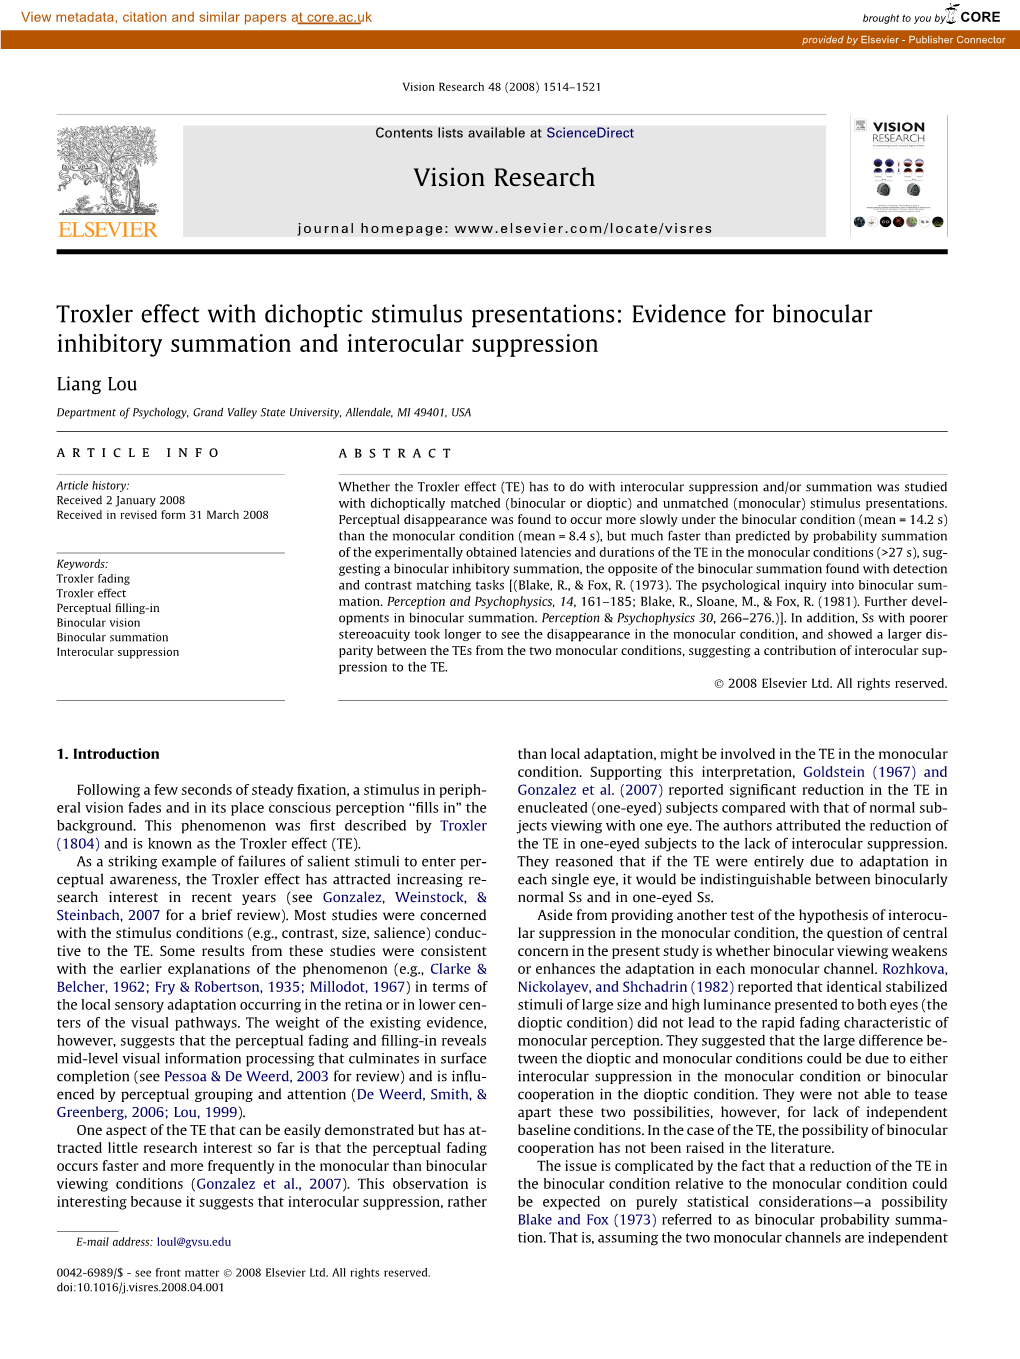 Troxler Effect with Dichoptic Stimulus Presentations: Evidence for Binocular Inhibitory Summation and Interocular Suppression Vi